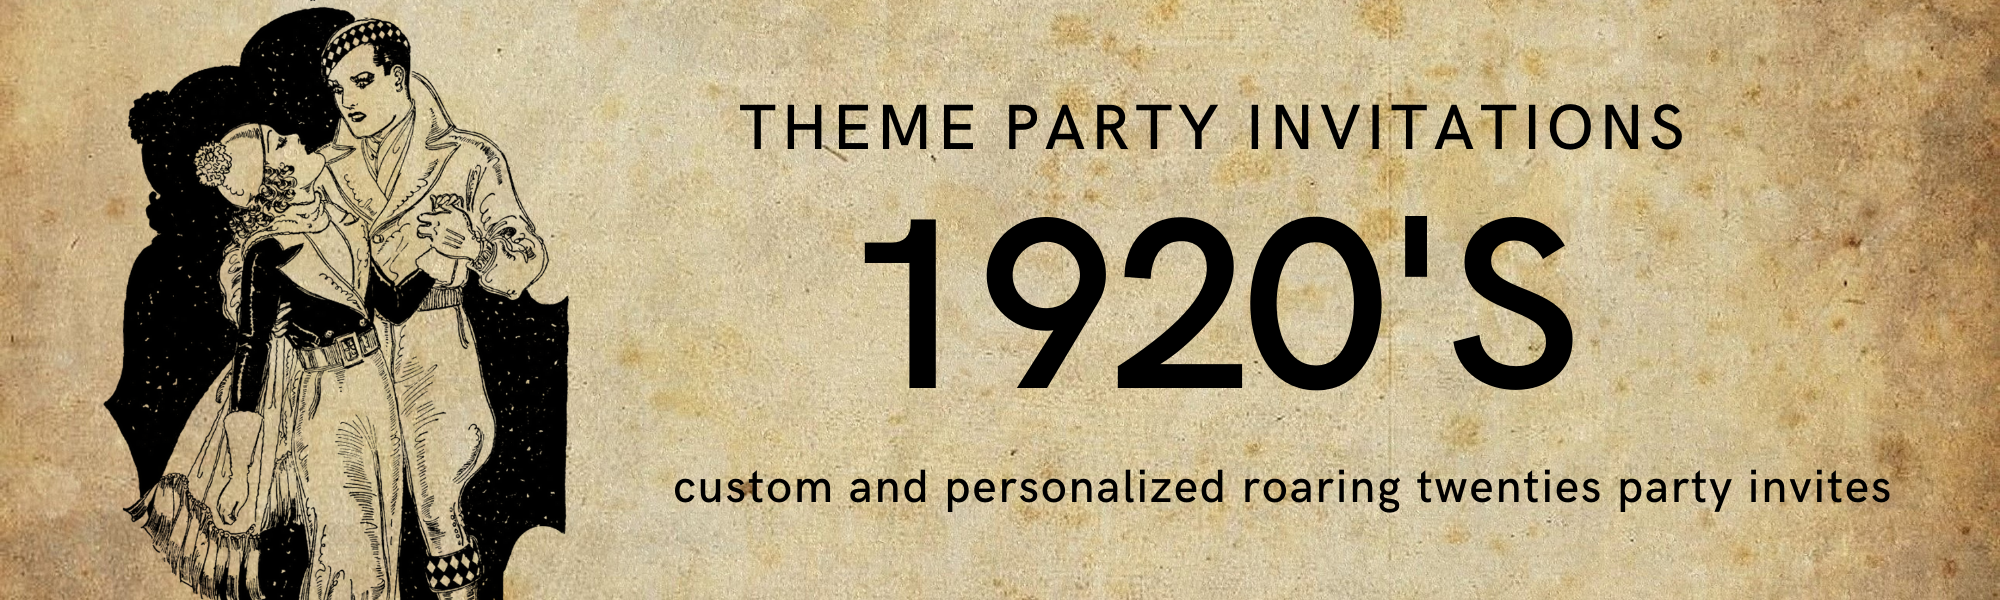 1920s theme party invitations